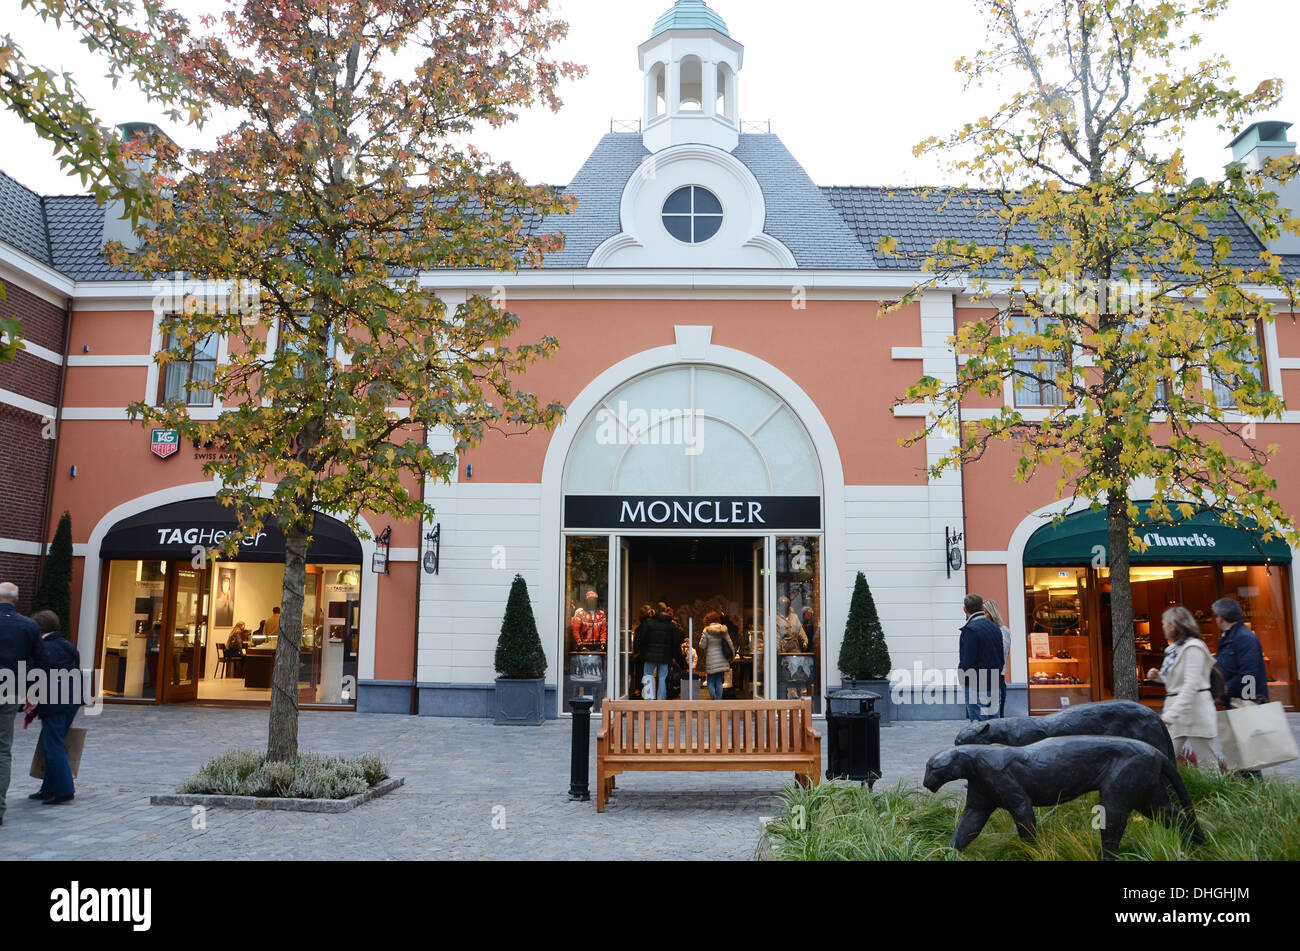 McArthur Glen Designer Outlet Center Roermond Netherlands Stock Photo: 62445340 - Alamy